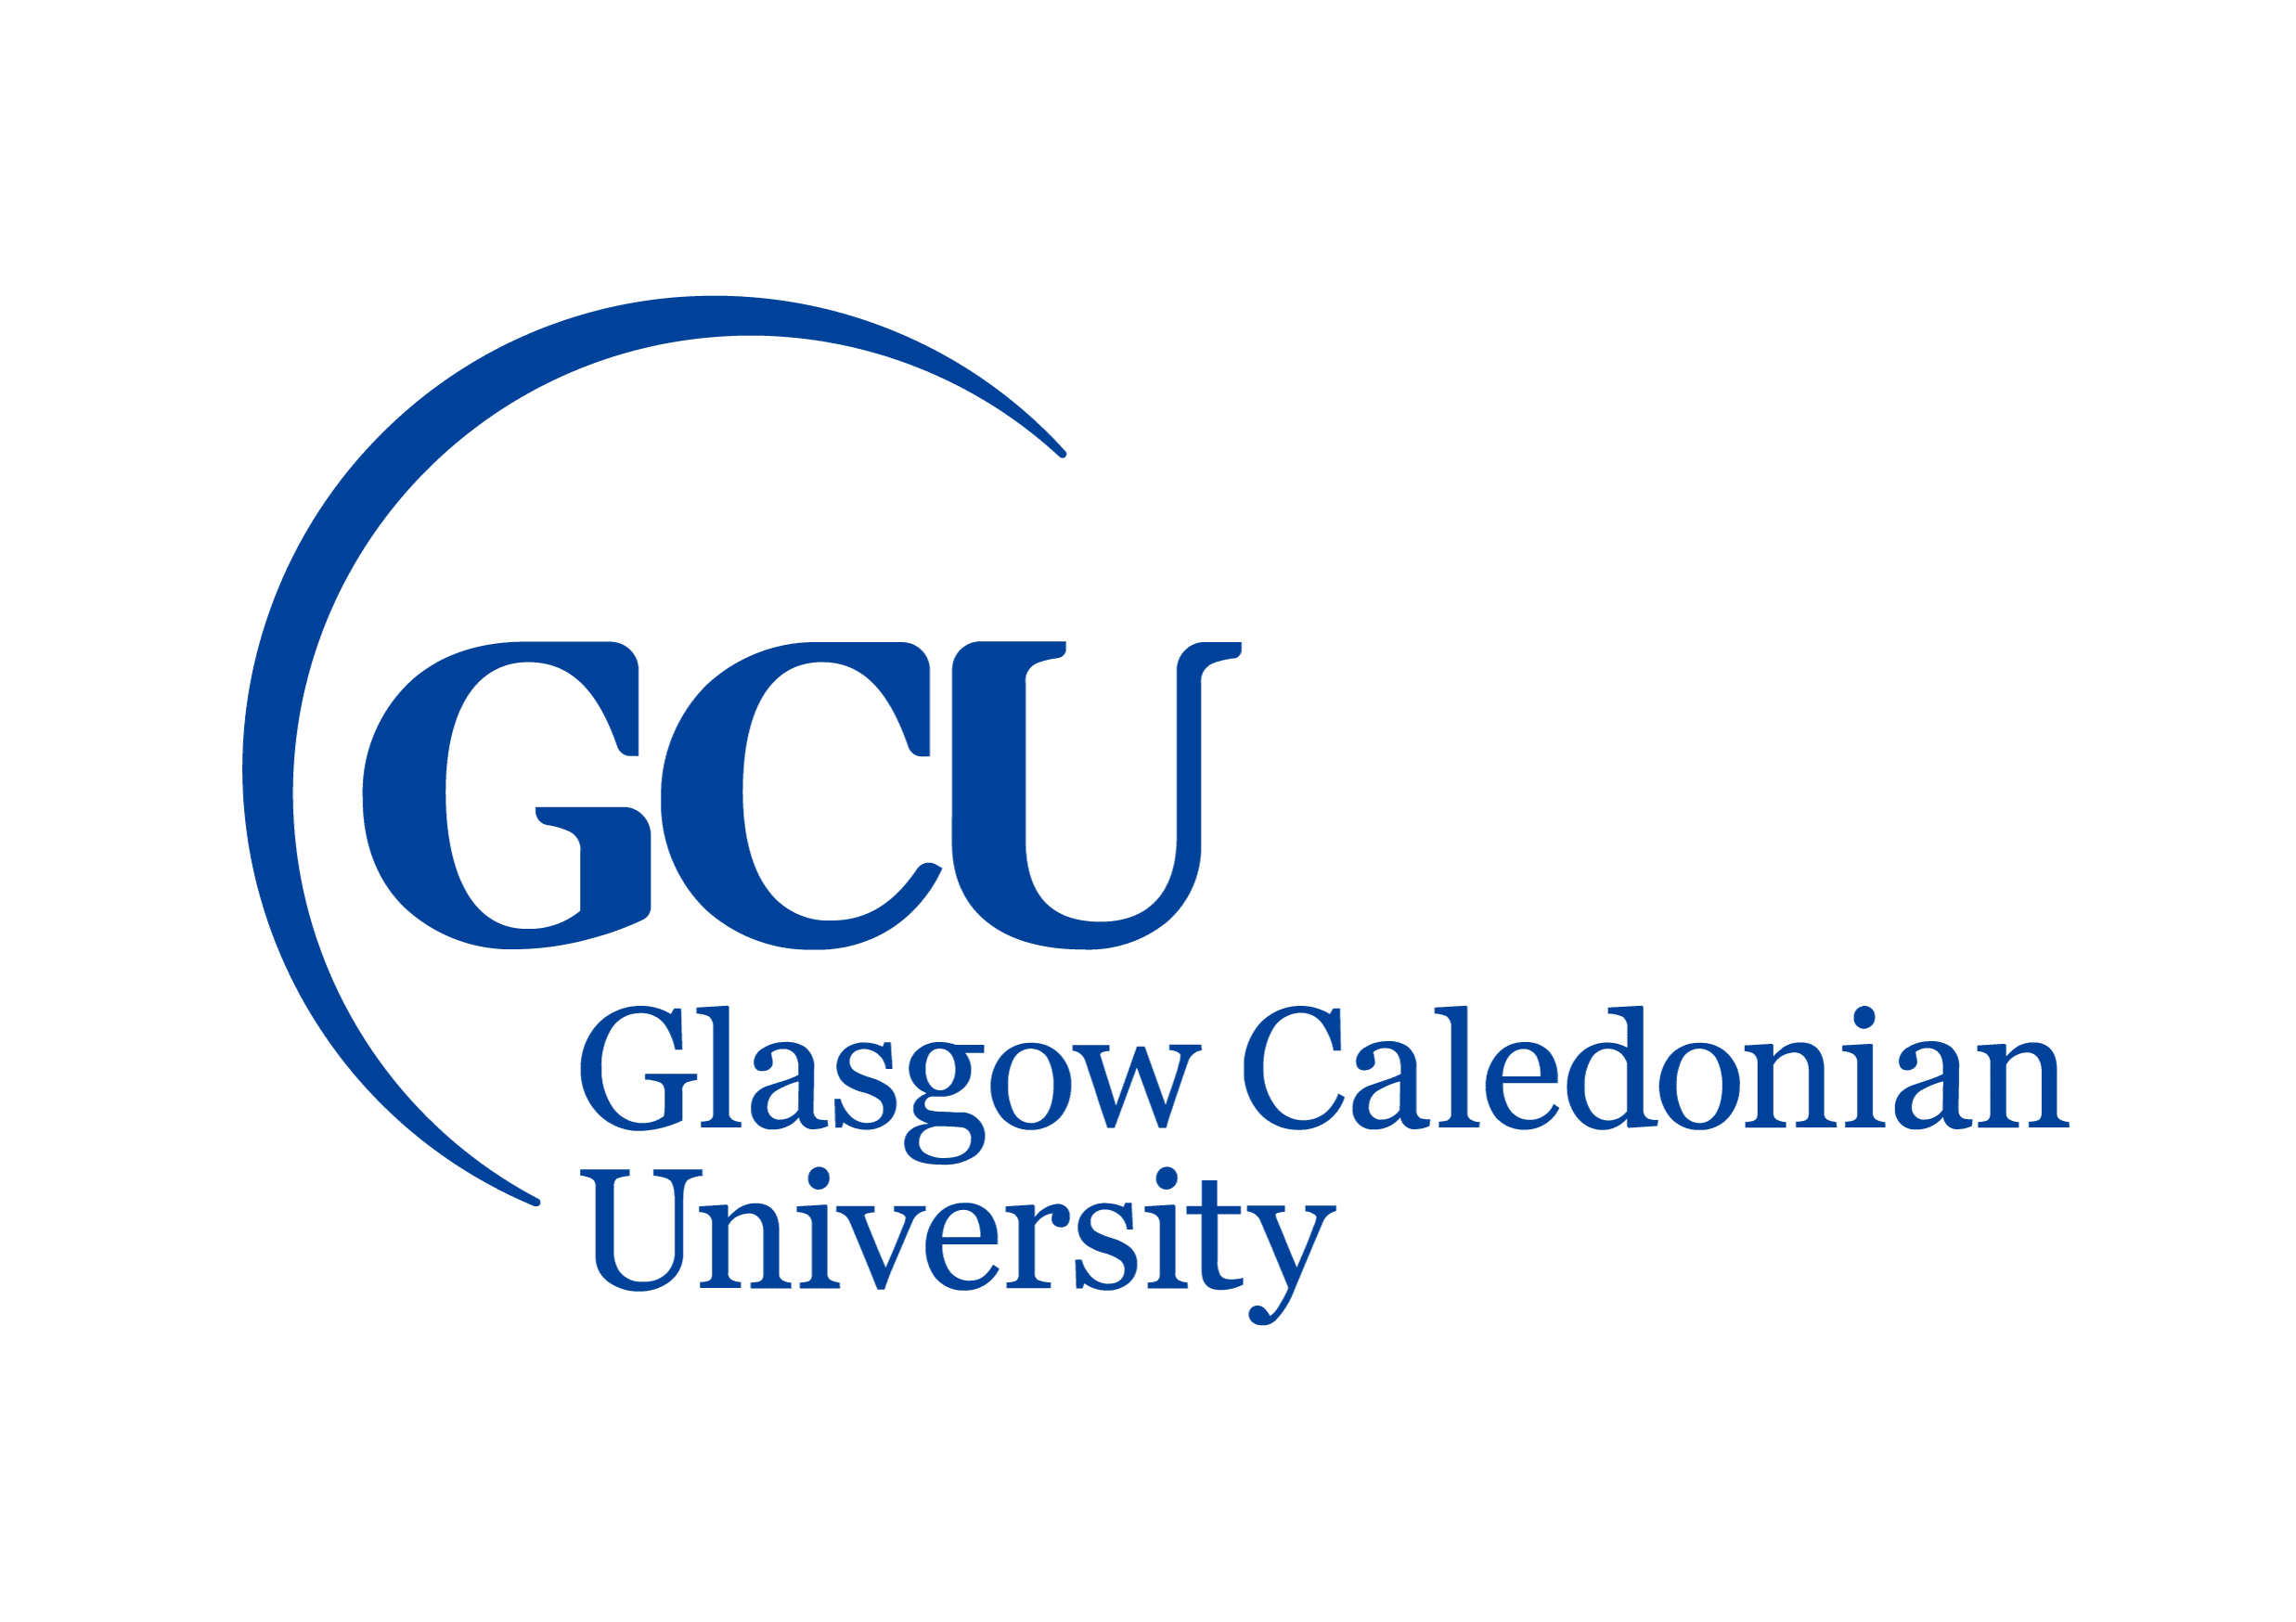 GCU Glasgow Caledonian University New